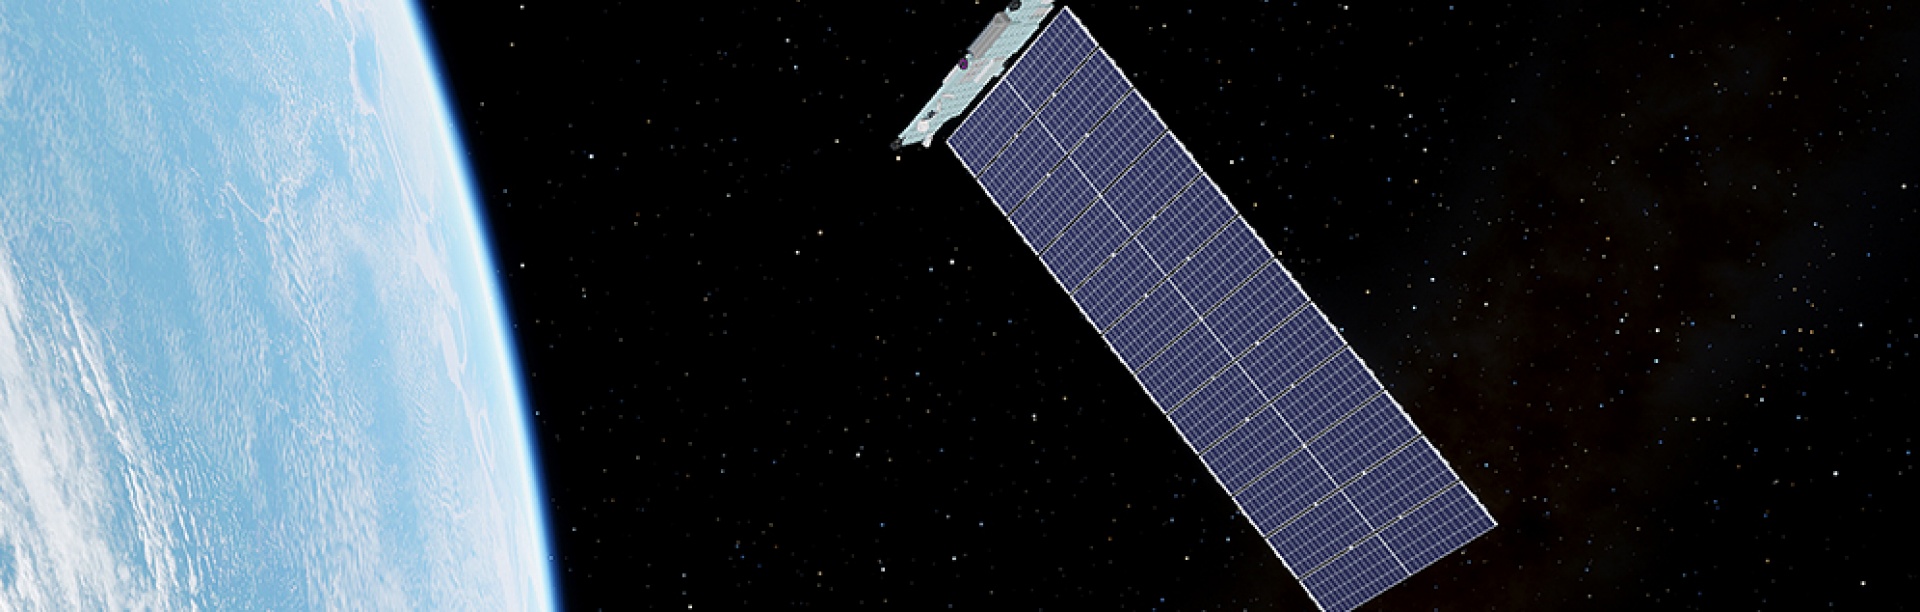 Starlink solar powered satellite orbiting earth. 